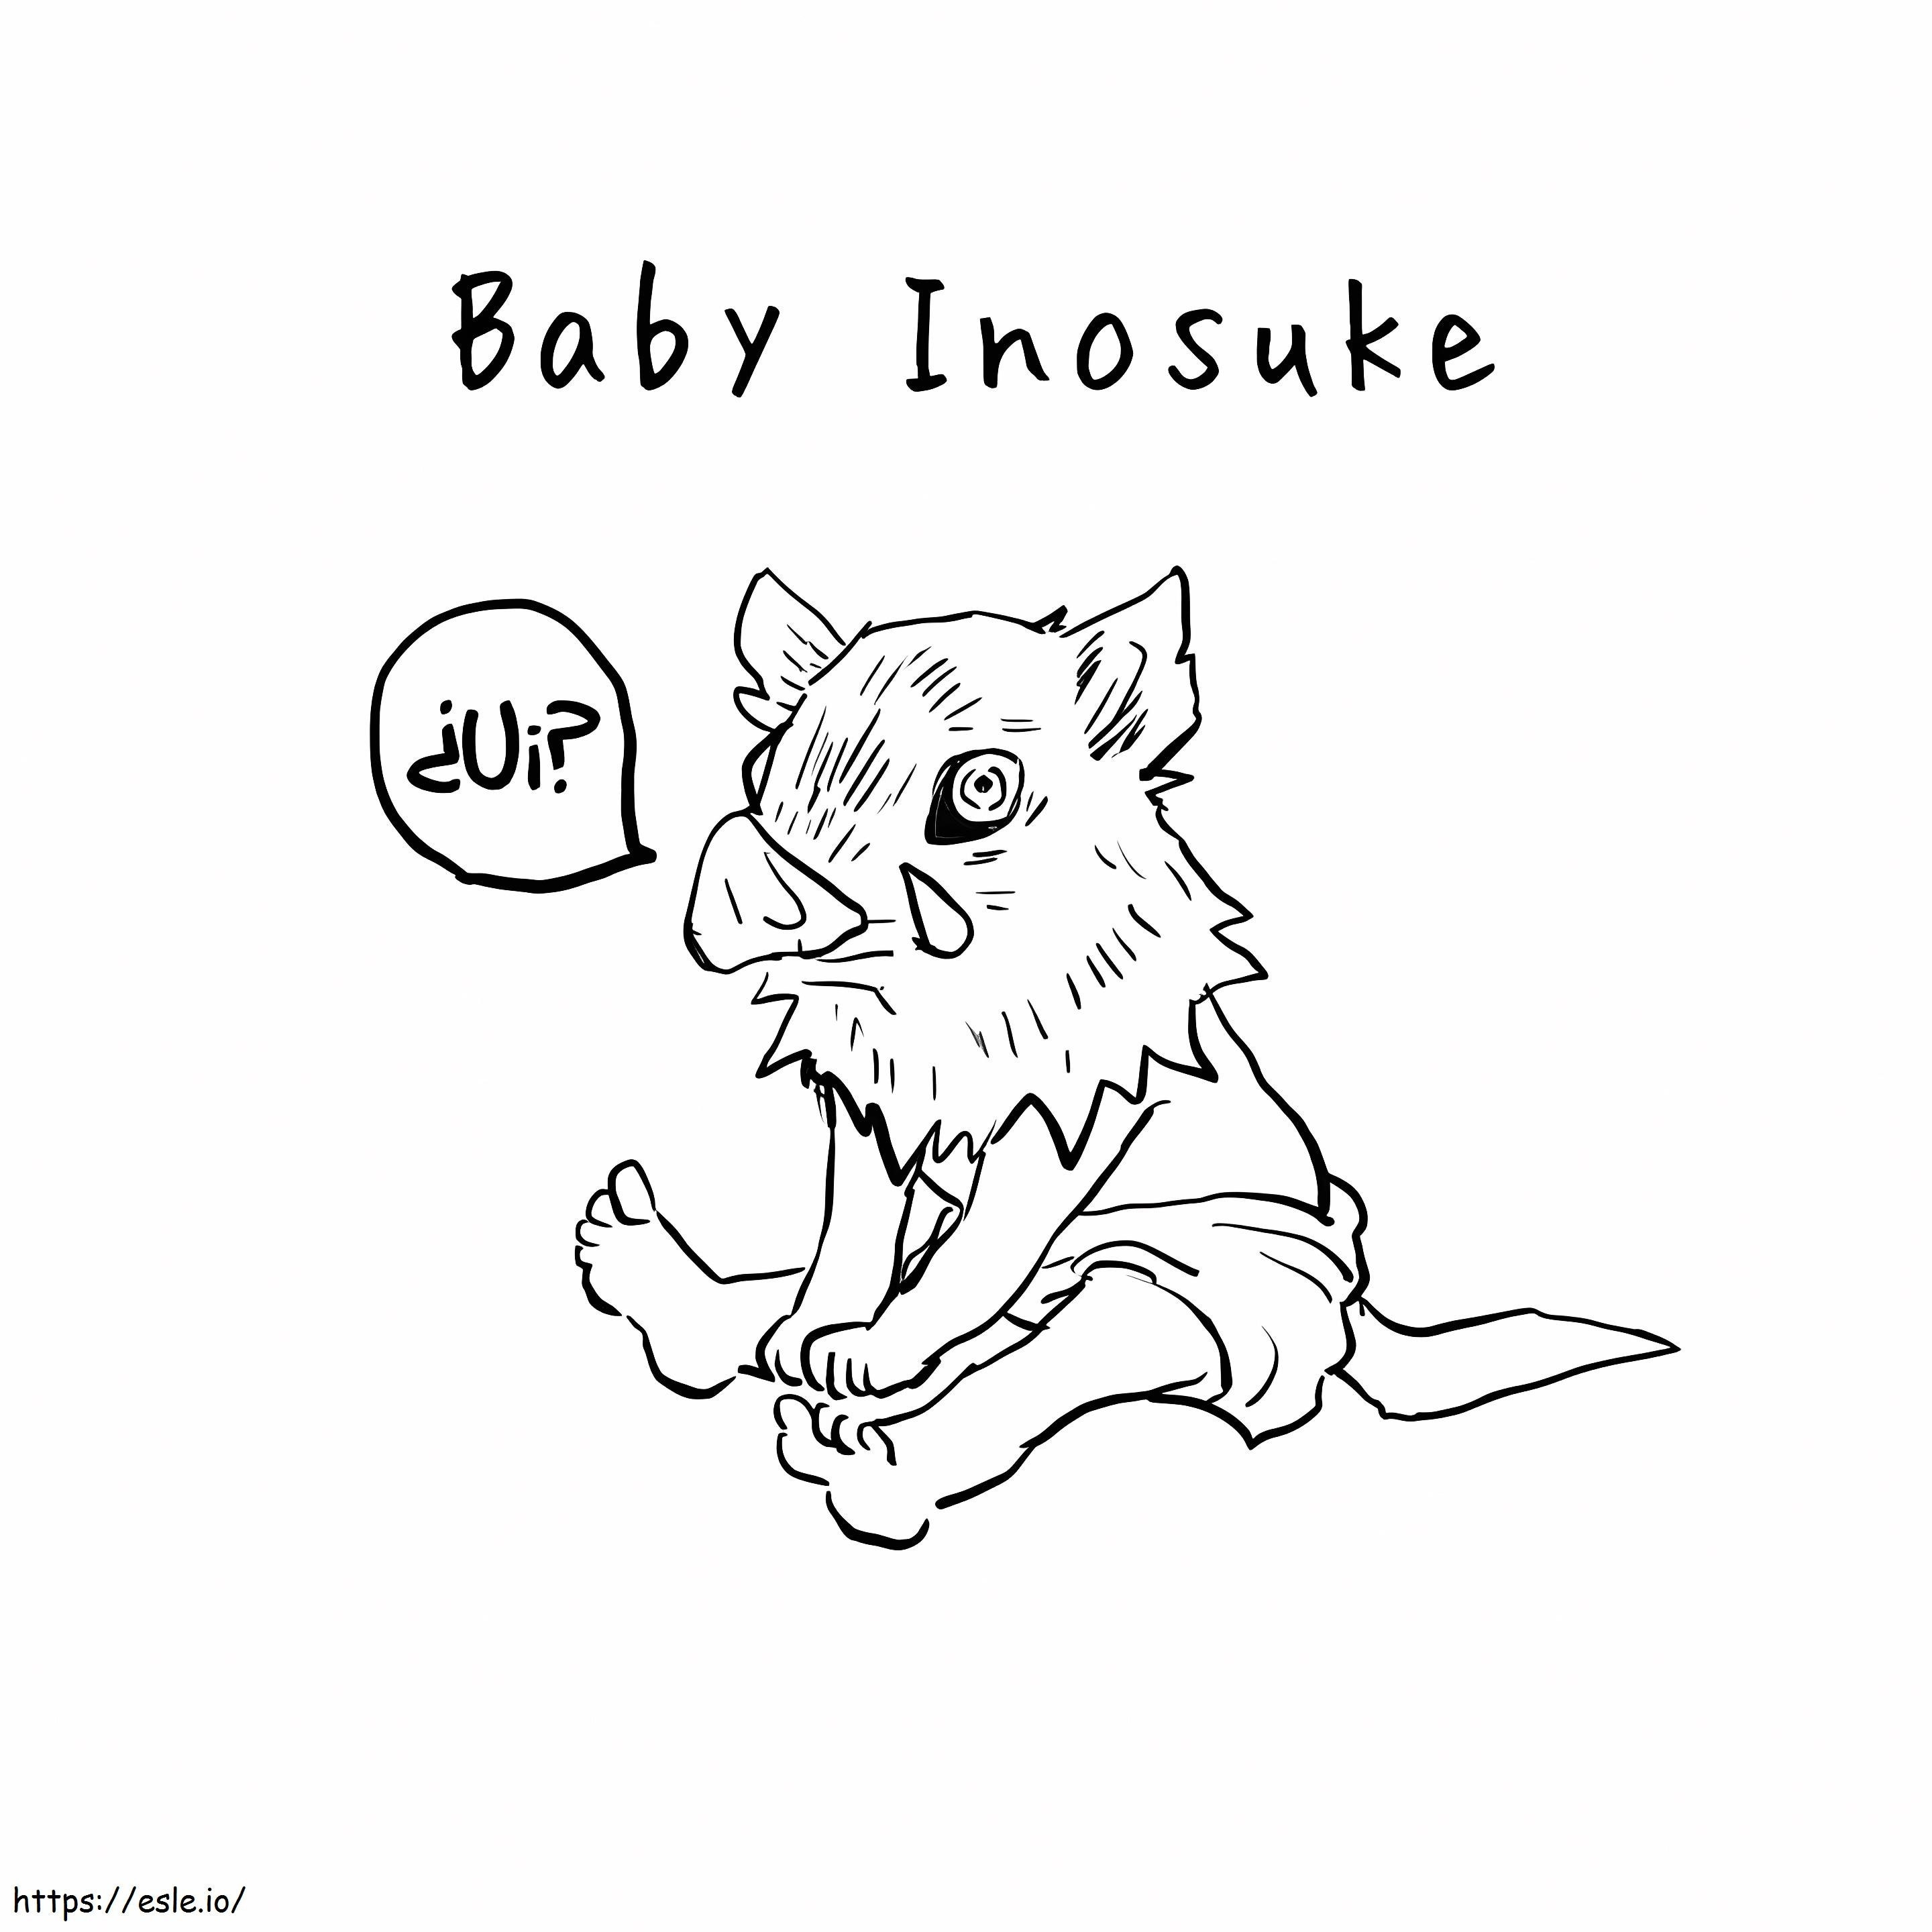 Cute Inosuke coloring page